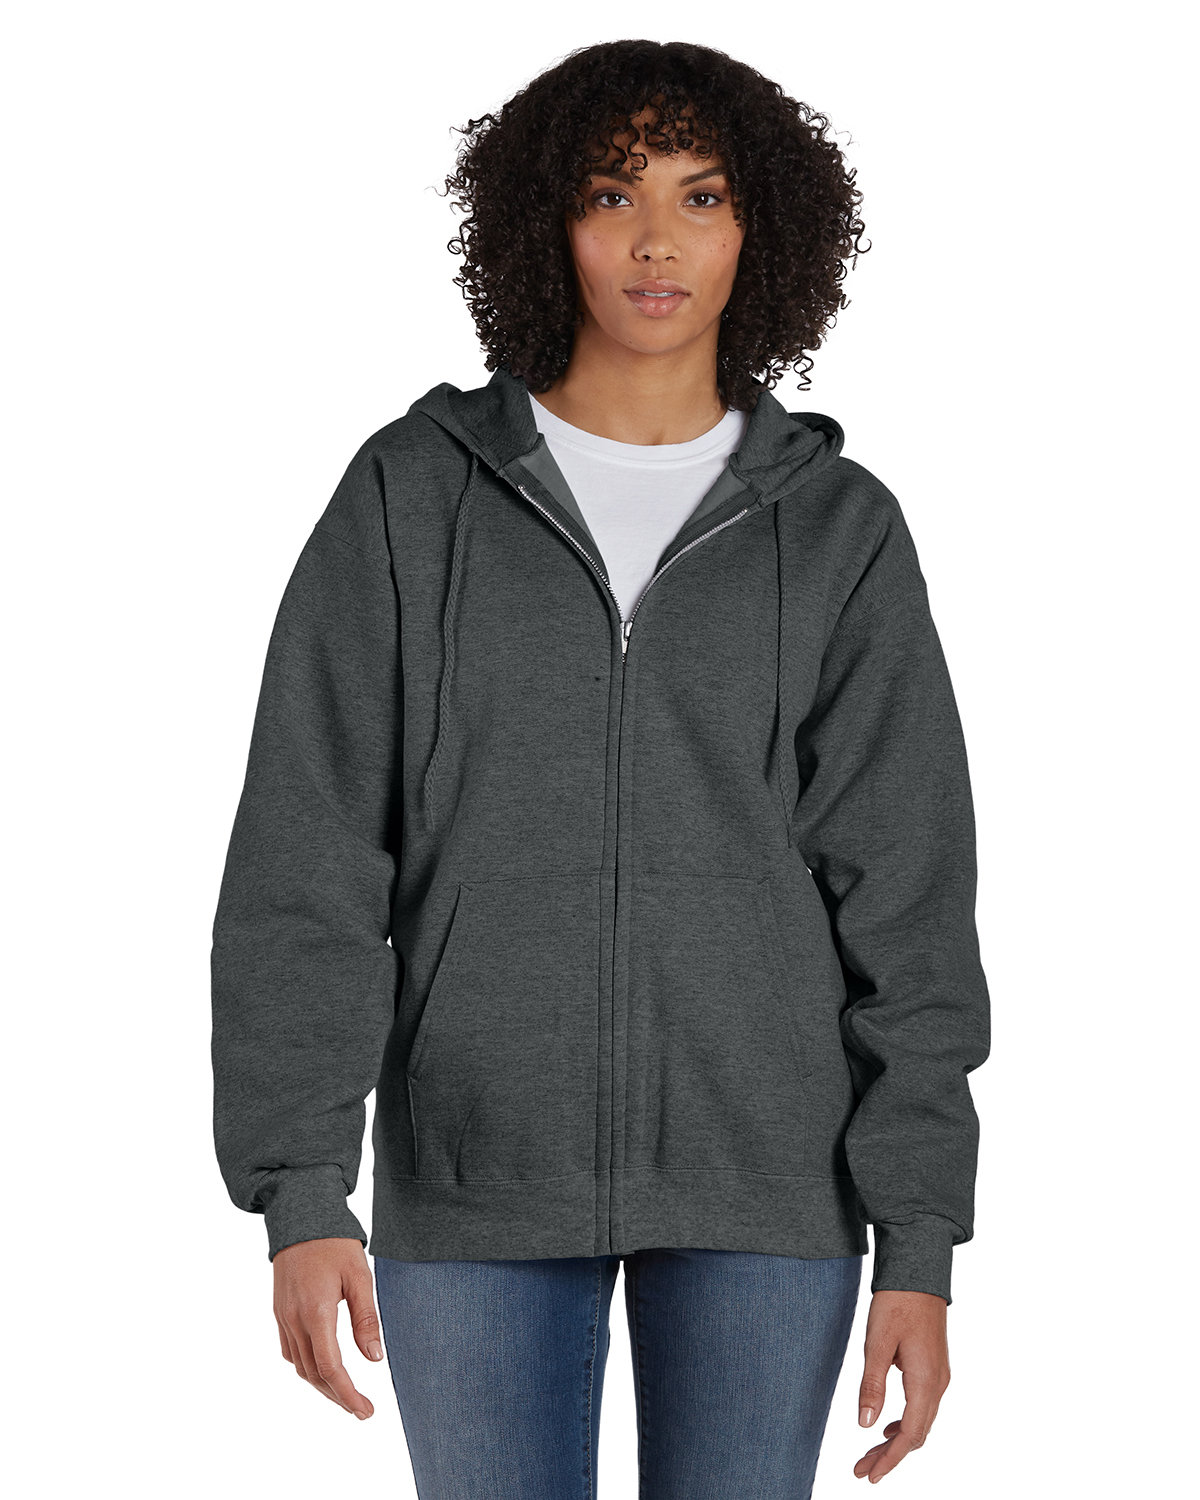 Hanes ultimate cotton printpro hoodie, Tagged Large